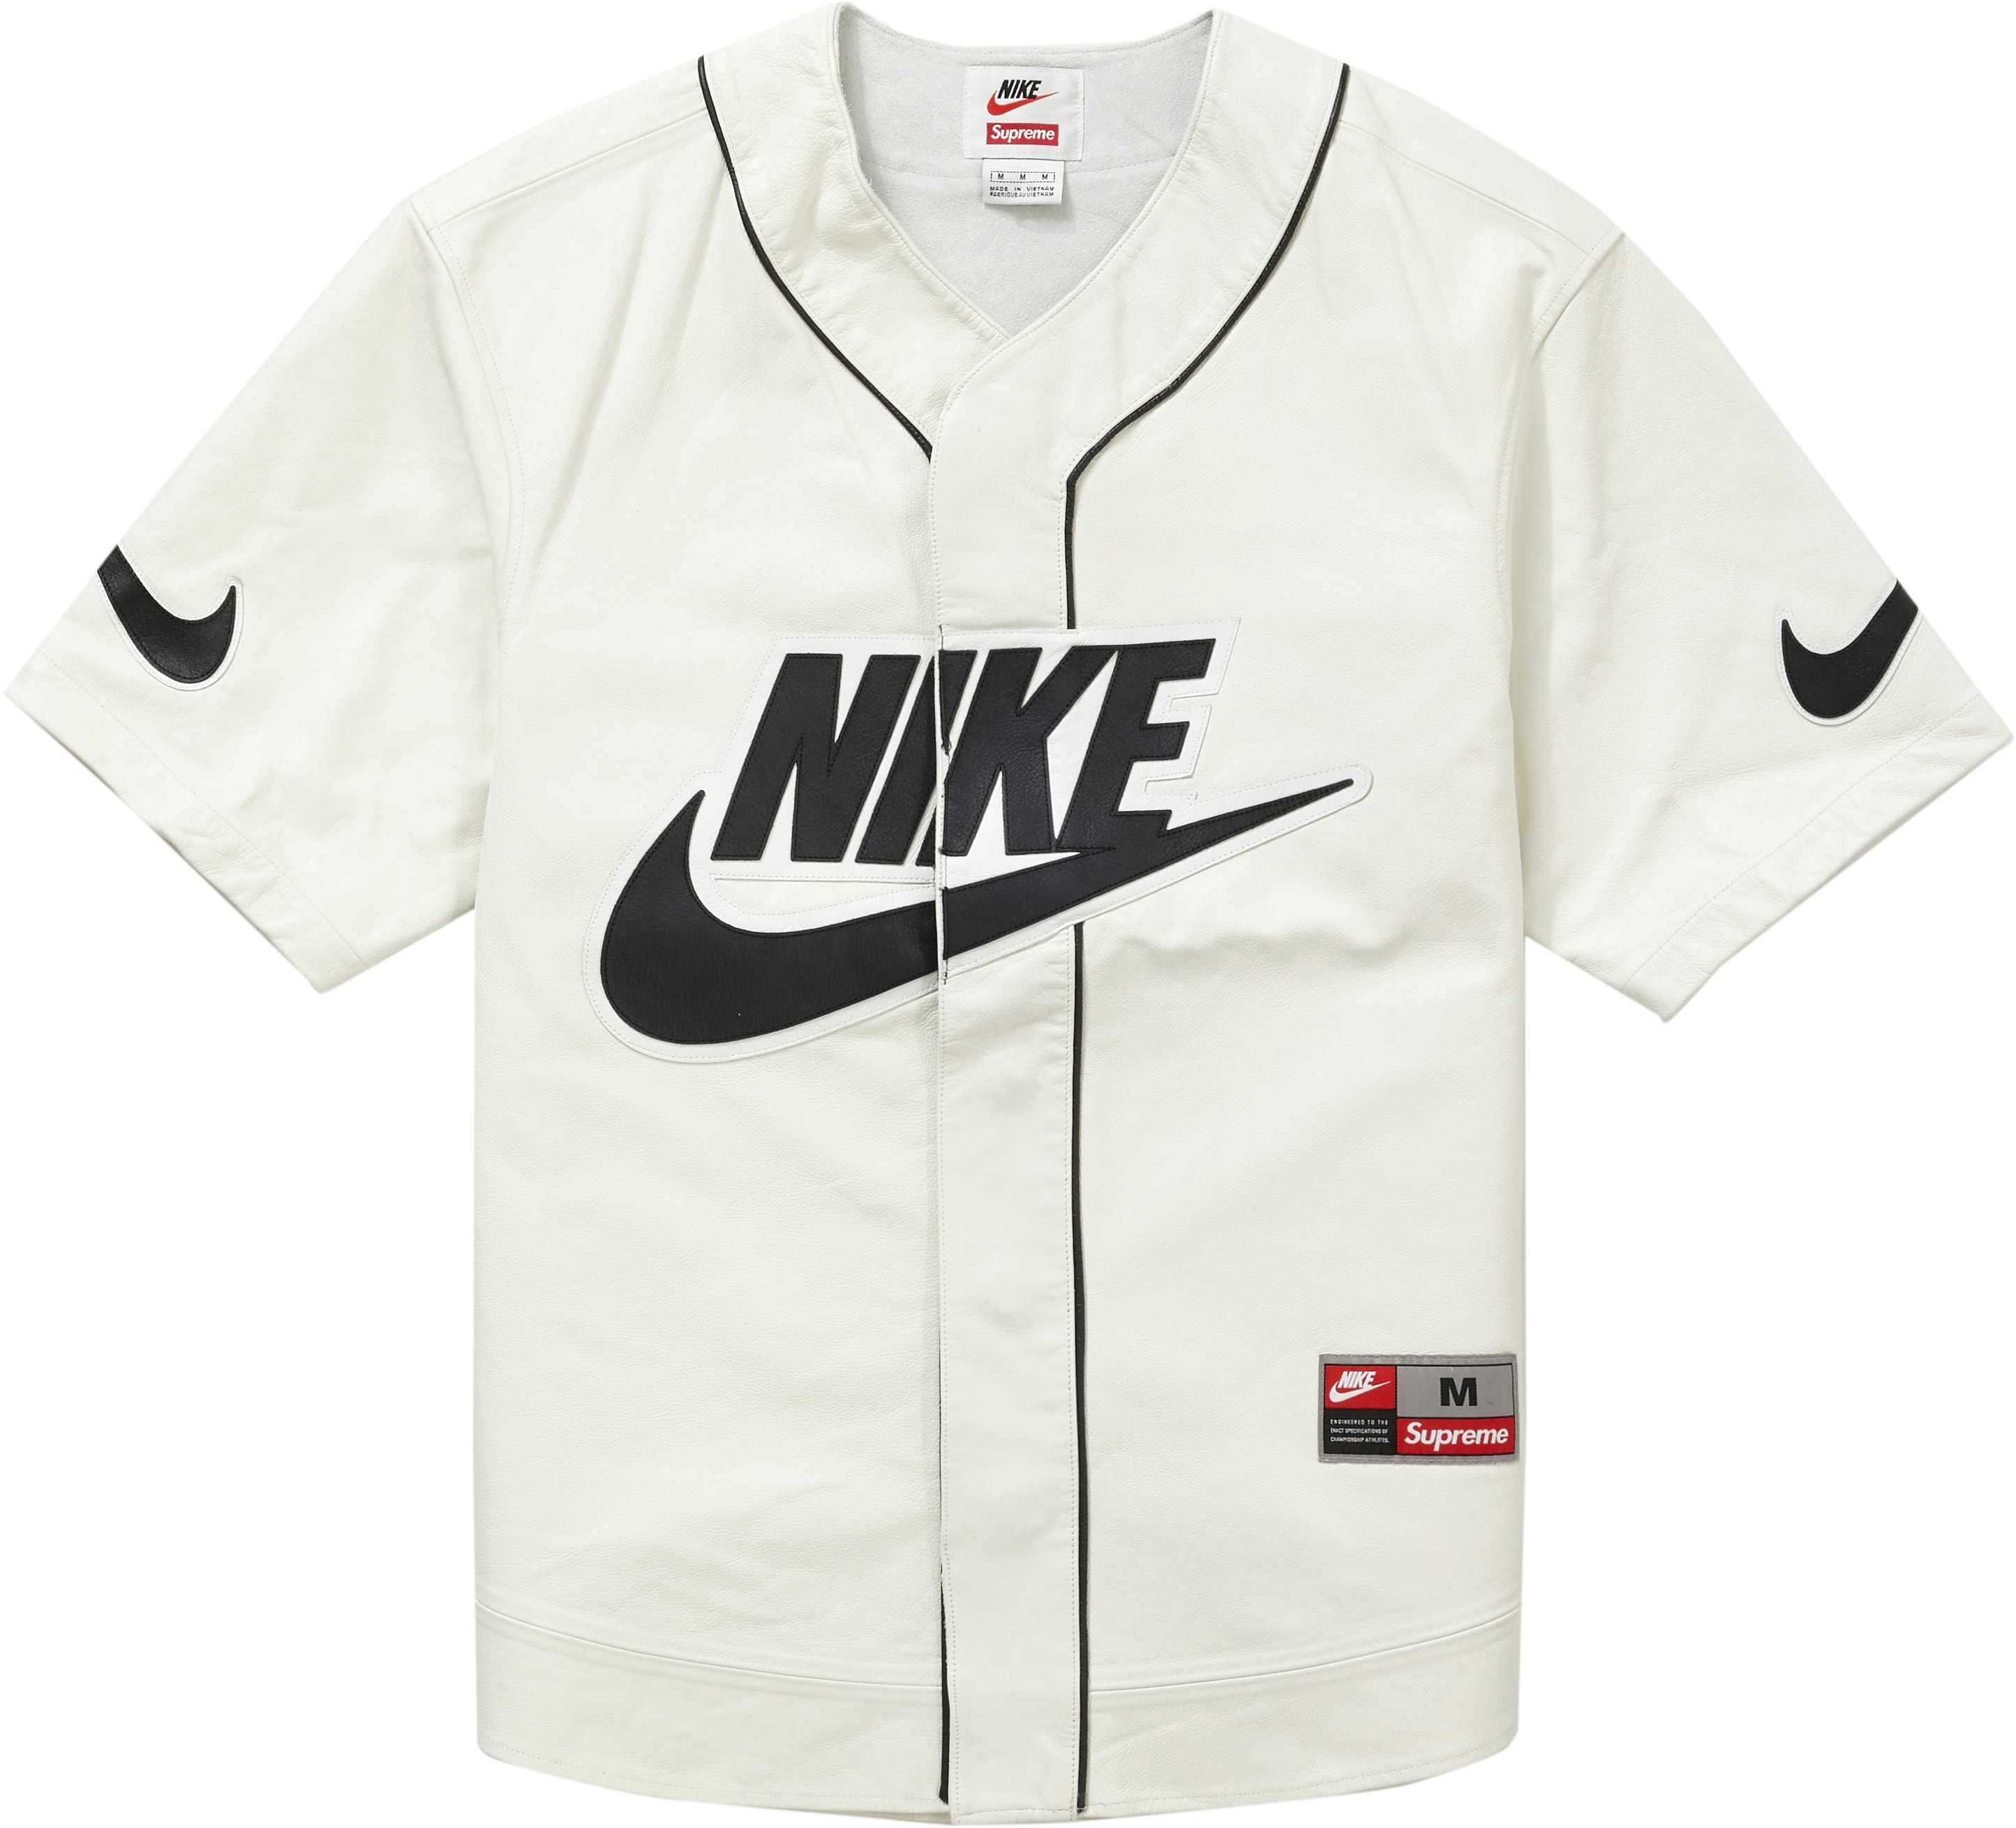 Nike X Supreme Leather Baseball Jersey - Sports & Outdoors - Redwood City,  California, Facebook Marketplace